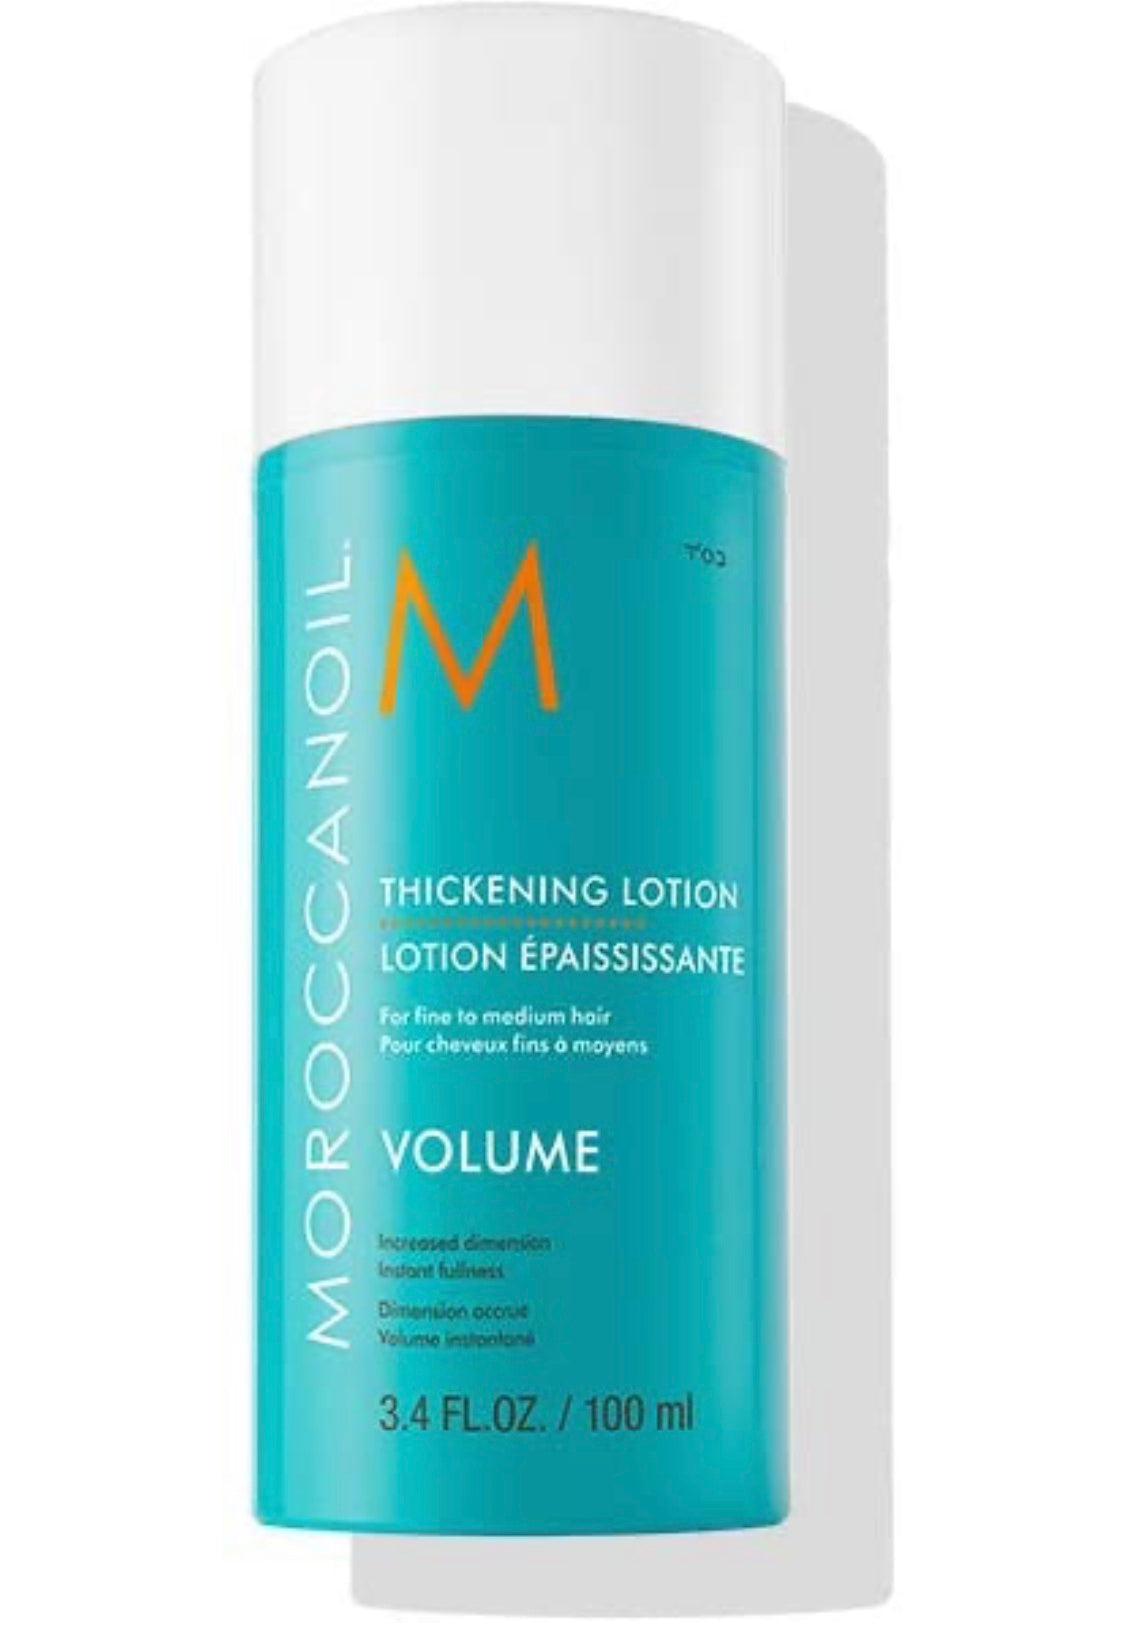 Moroccanoil - Thickening lotion volume 3.4 fl. oz./ 100 ml